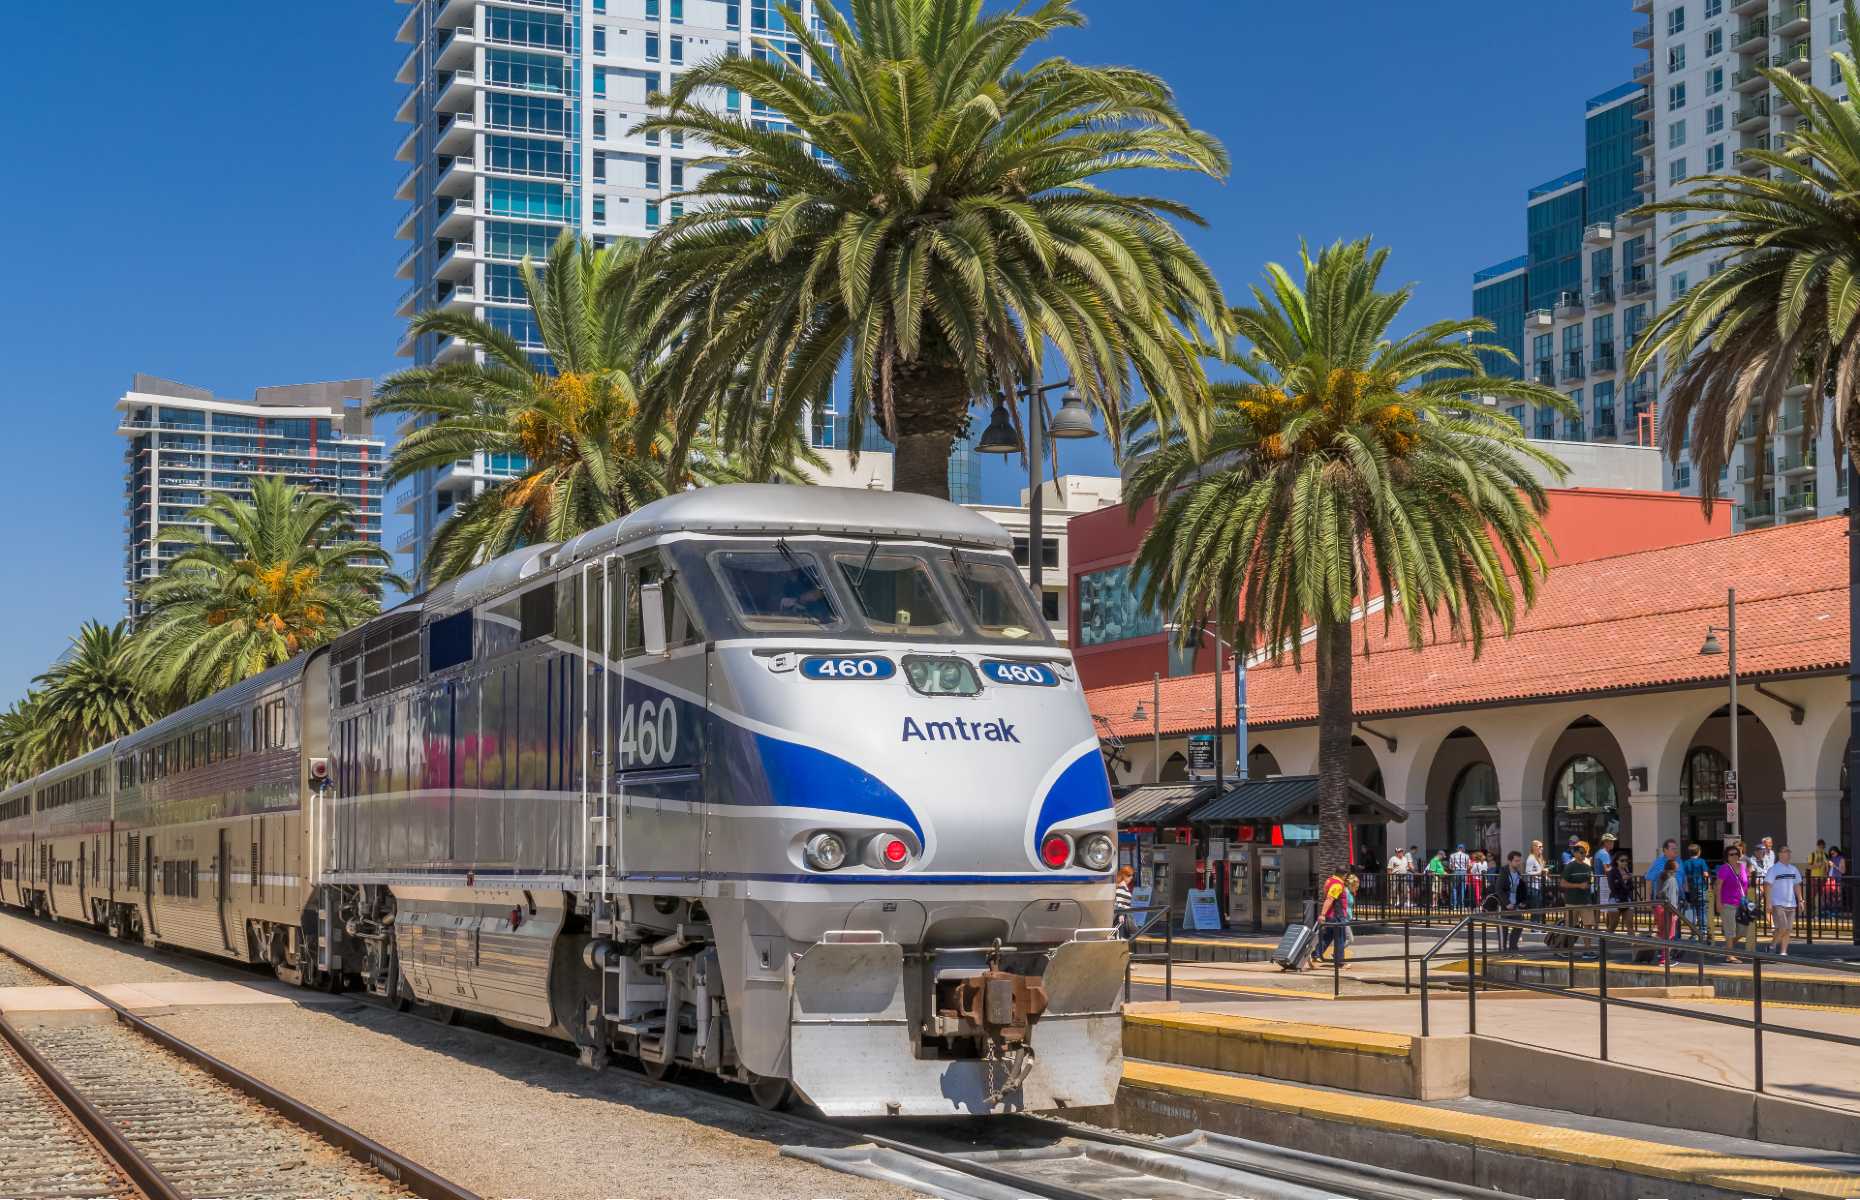 Amtrak in San Diego, California (Image: Ken Wolter/Shutterstock)